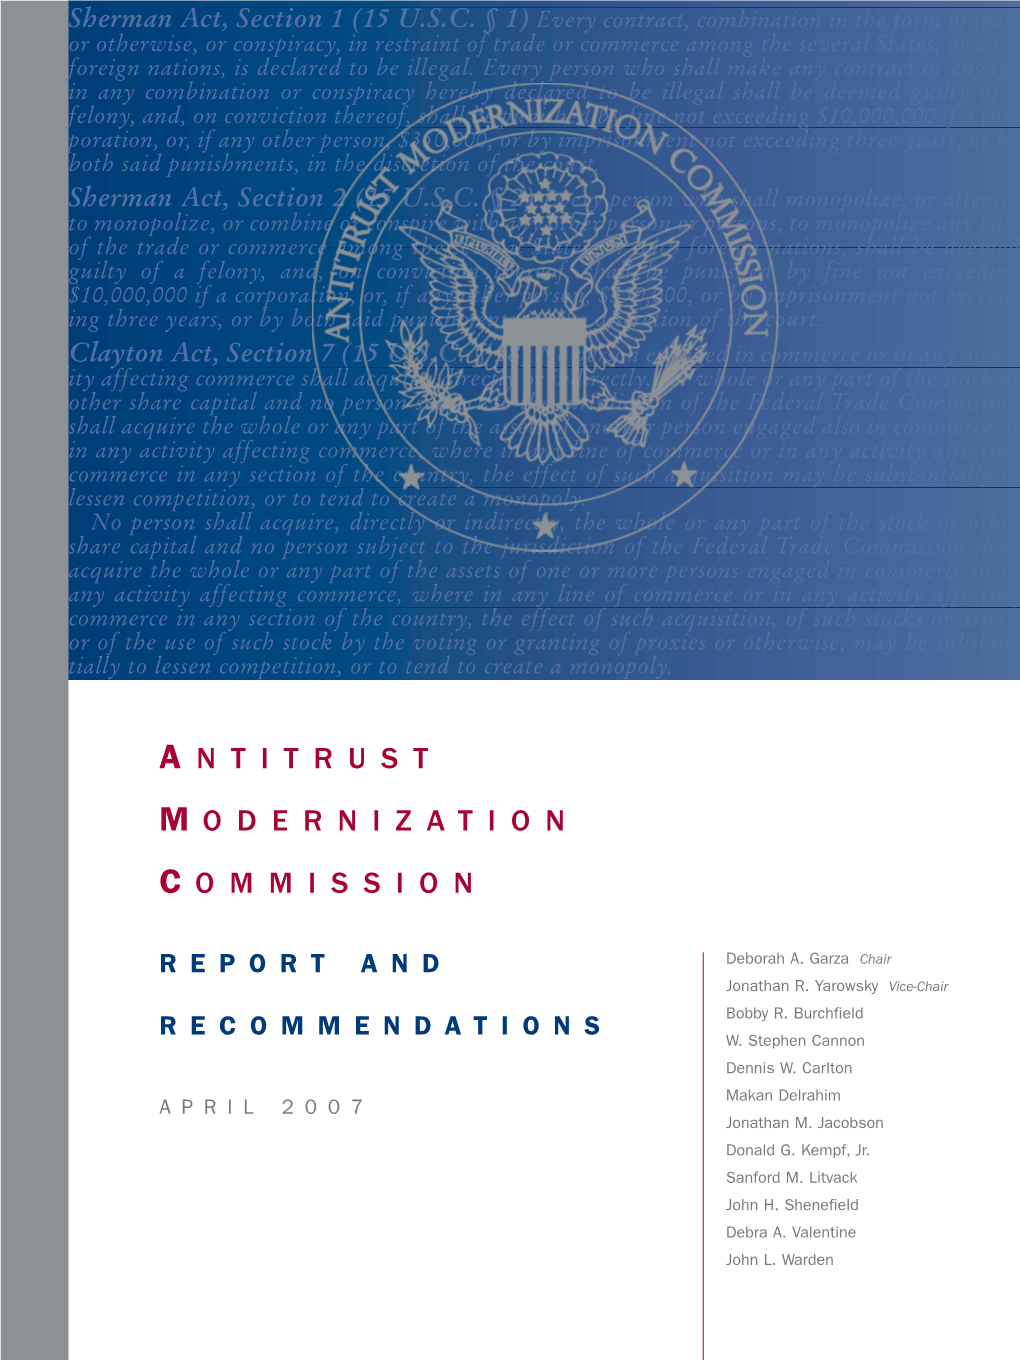 Antitrust Modernization Commission: Report and Recommendations